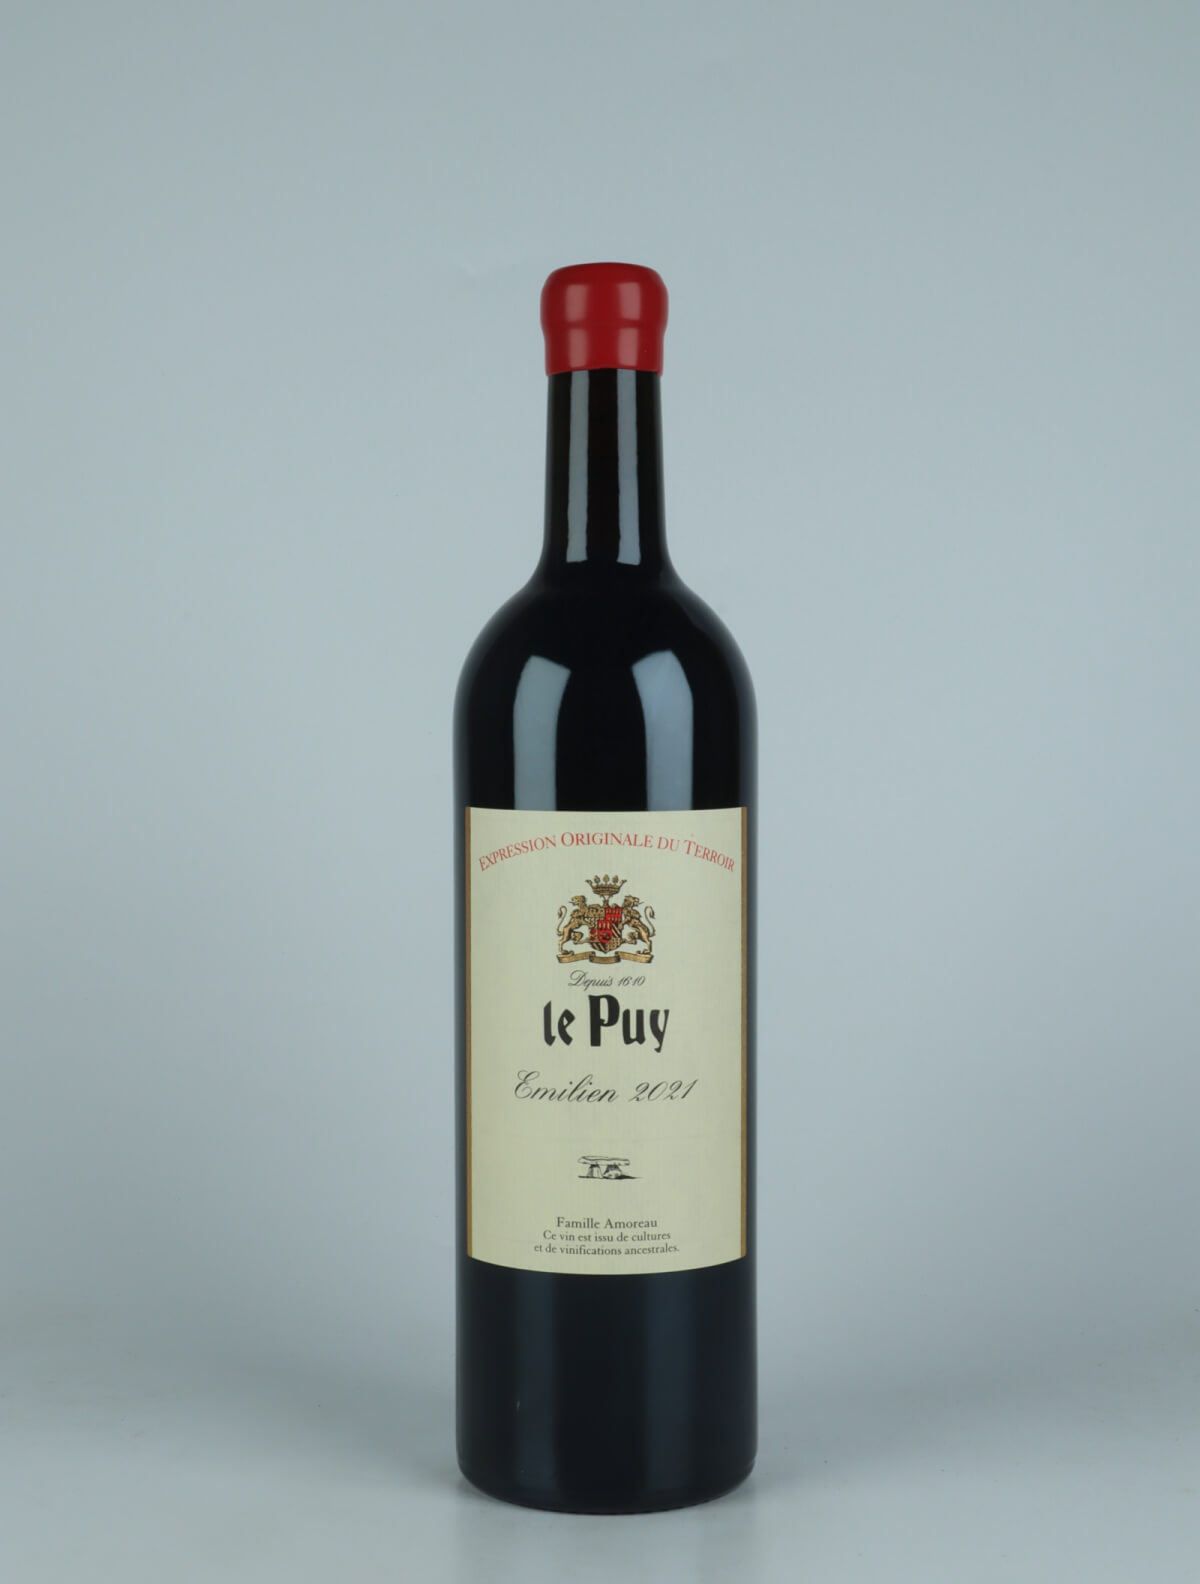 A bottle 2021 Emilien Red wine from Château le Puy, Bordeaux in France